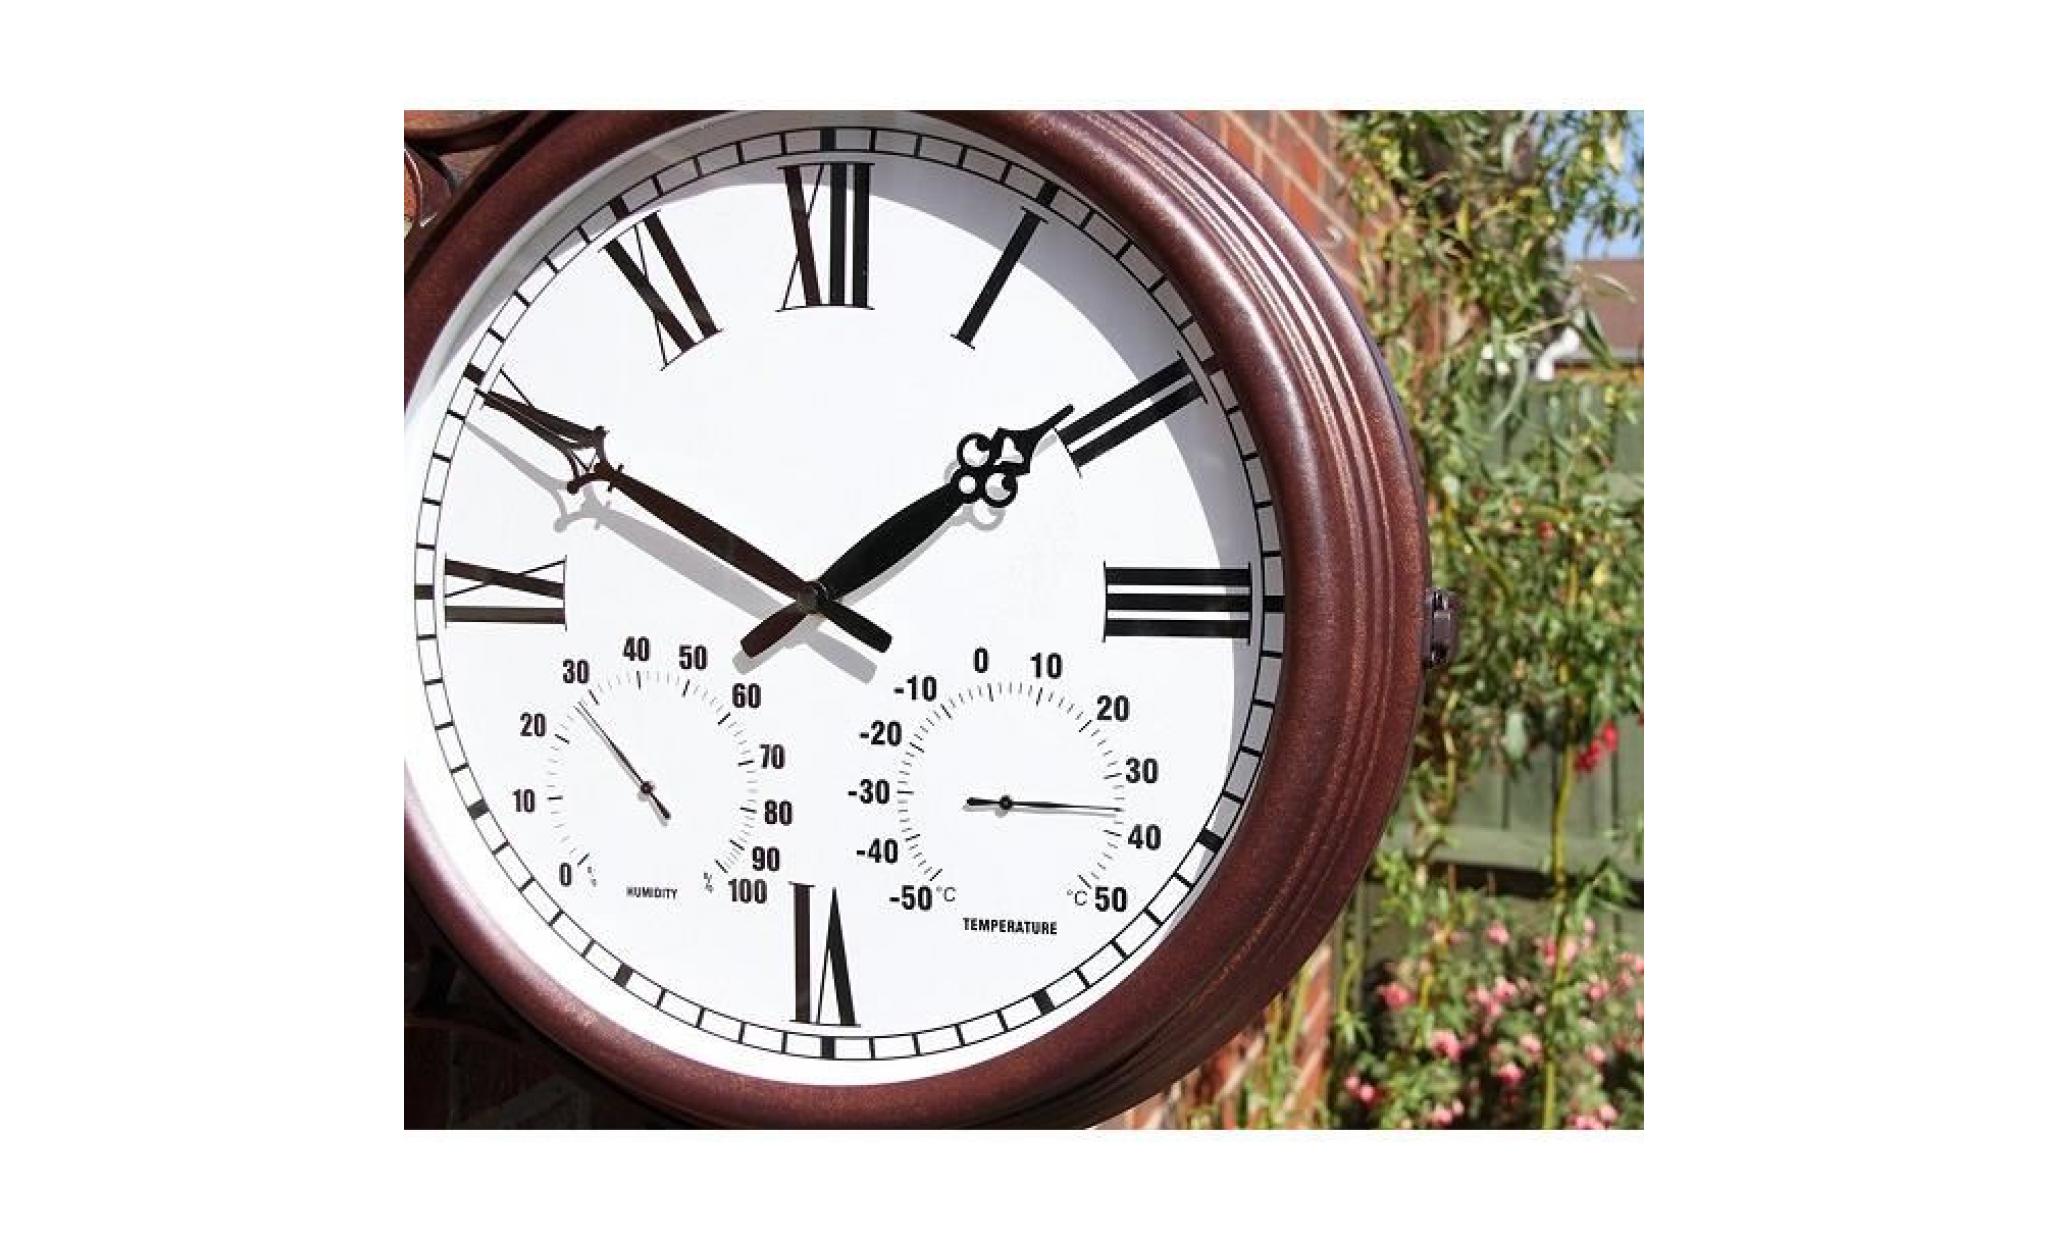 outside in designs greenwich horloge de jardin avec cadran style gare 34,5 cm pas cher